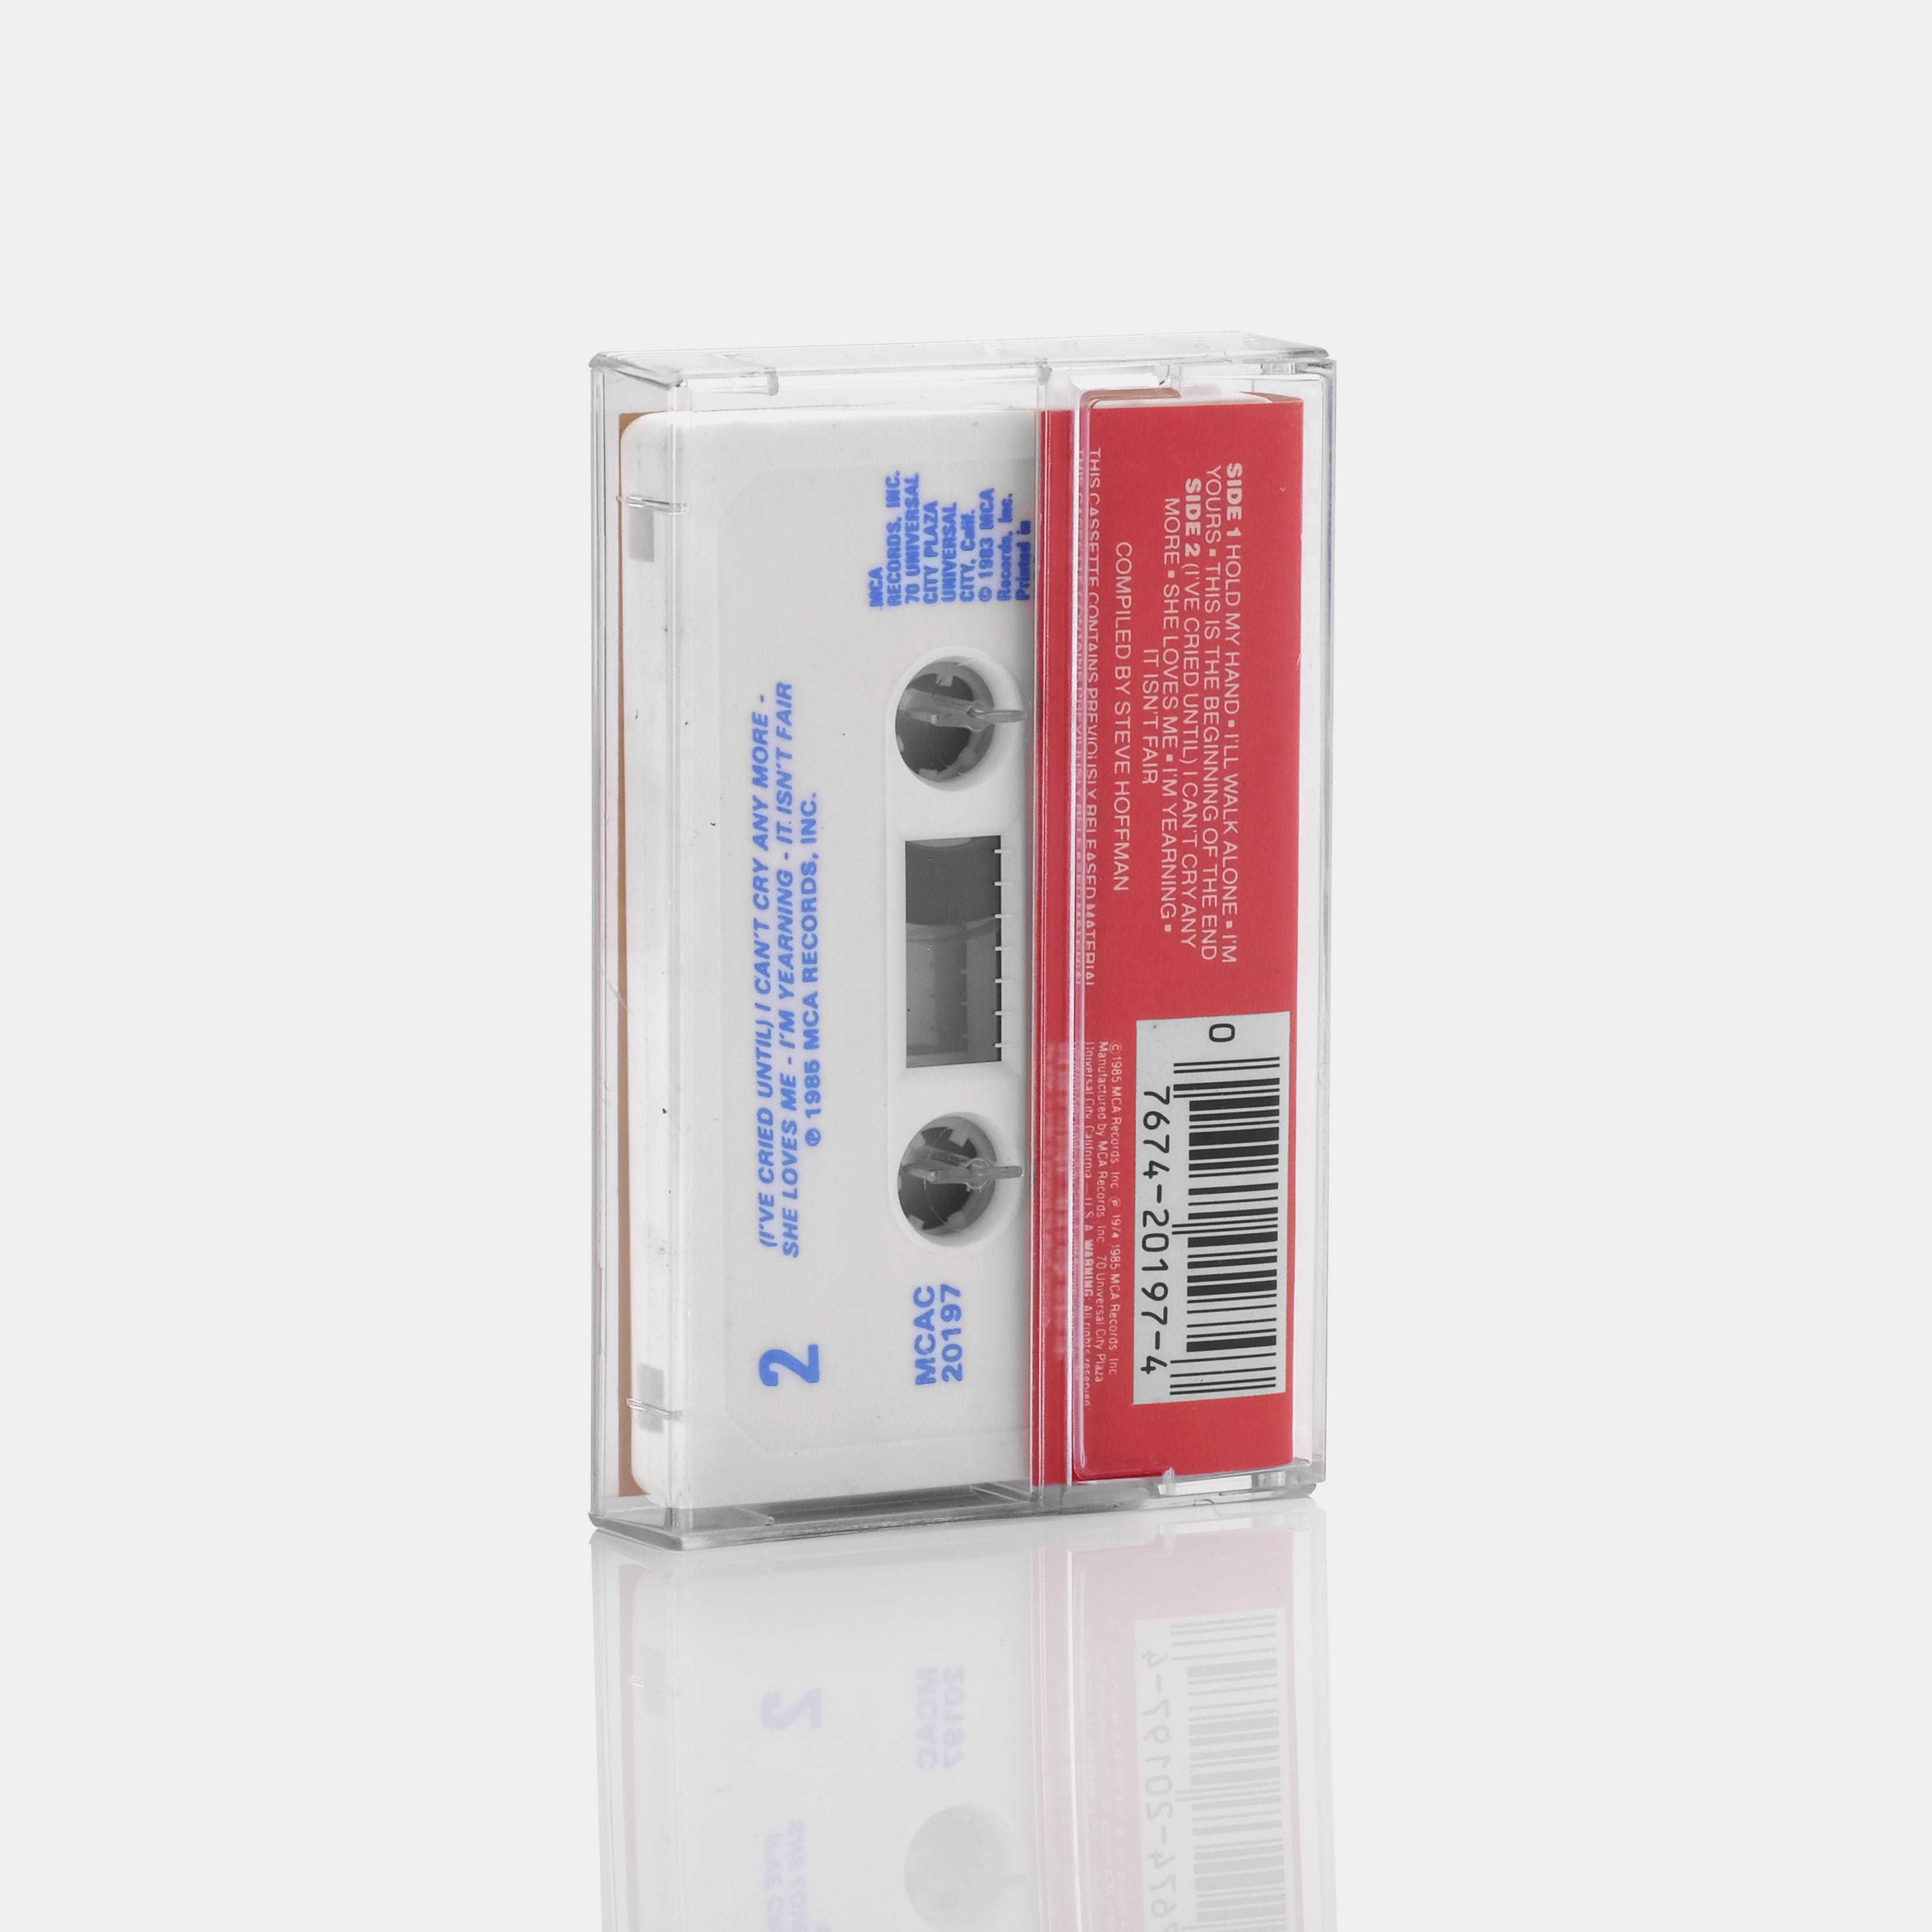 Don Cornell - Hold My Hand Cassette Tape